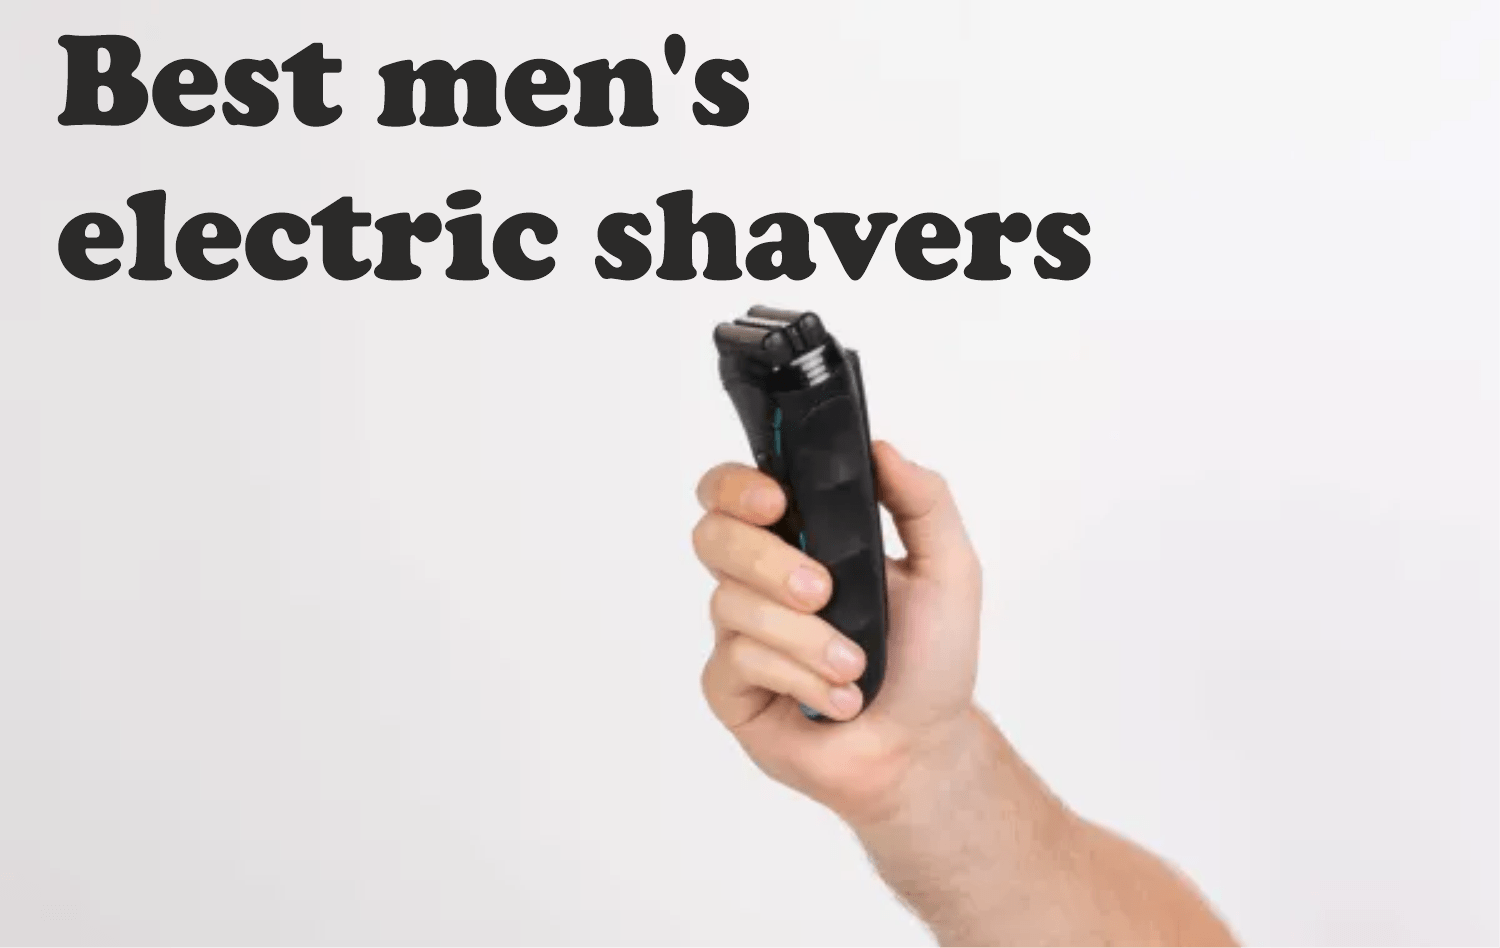 Best men's electric shavers